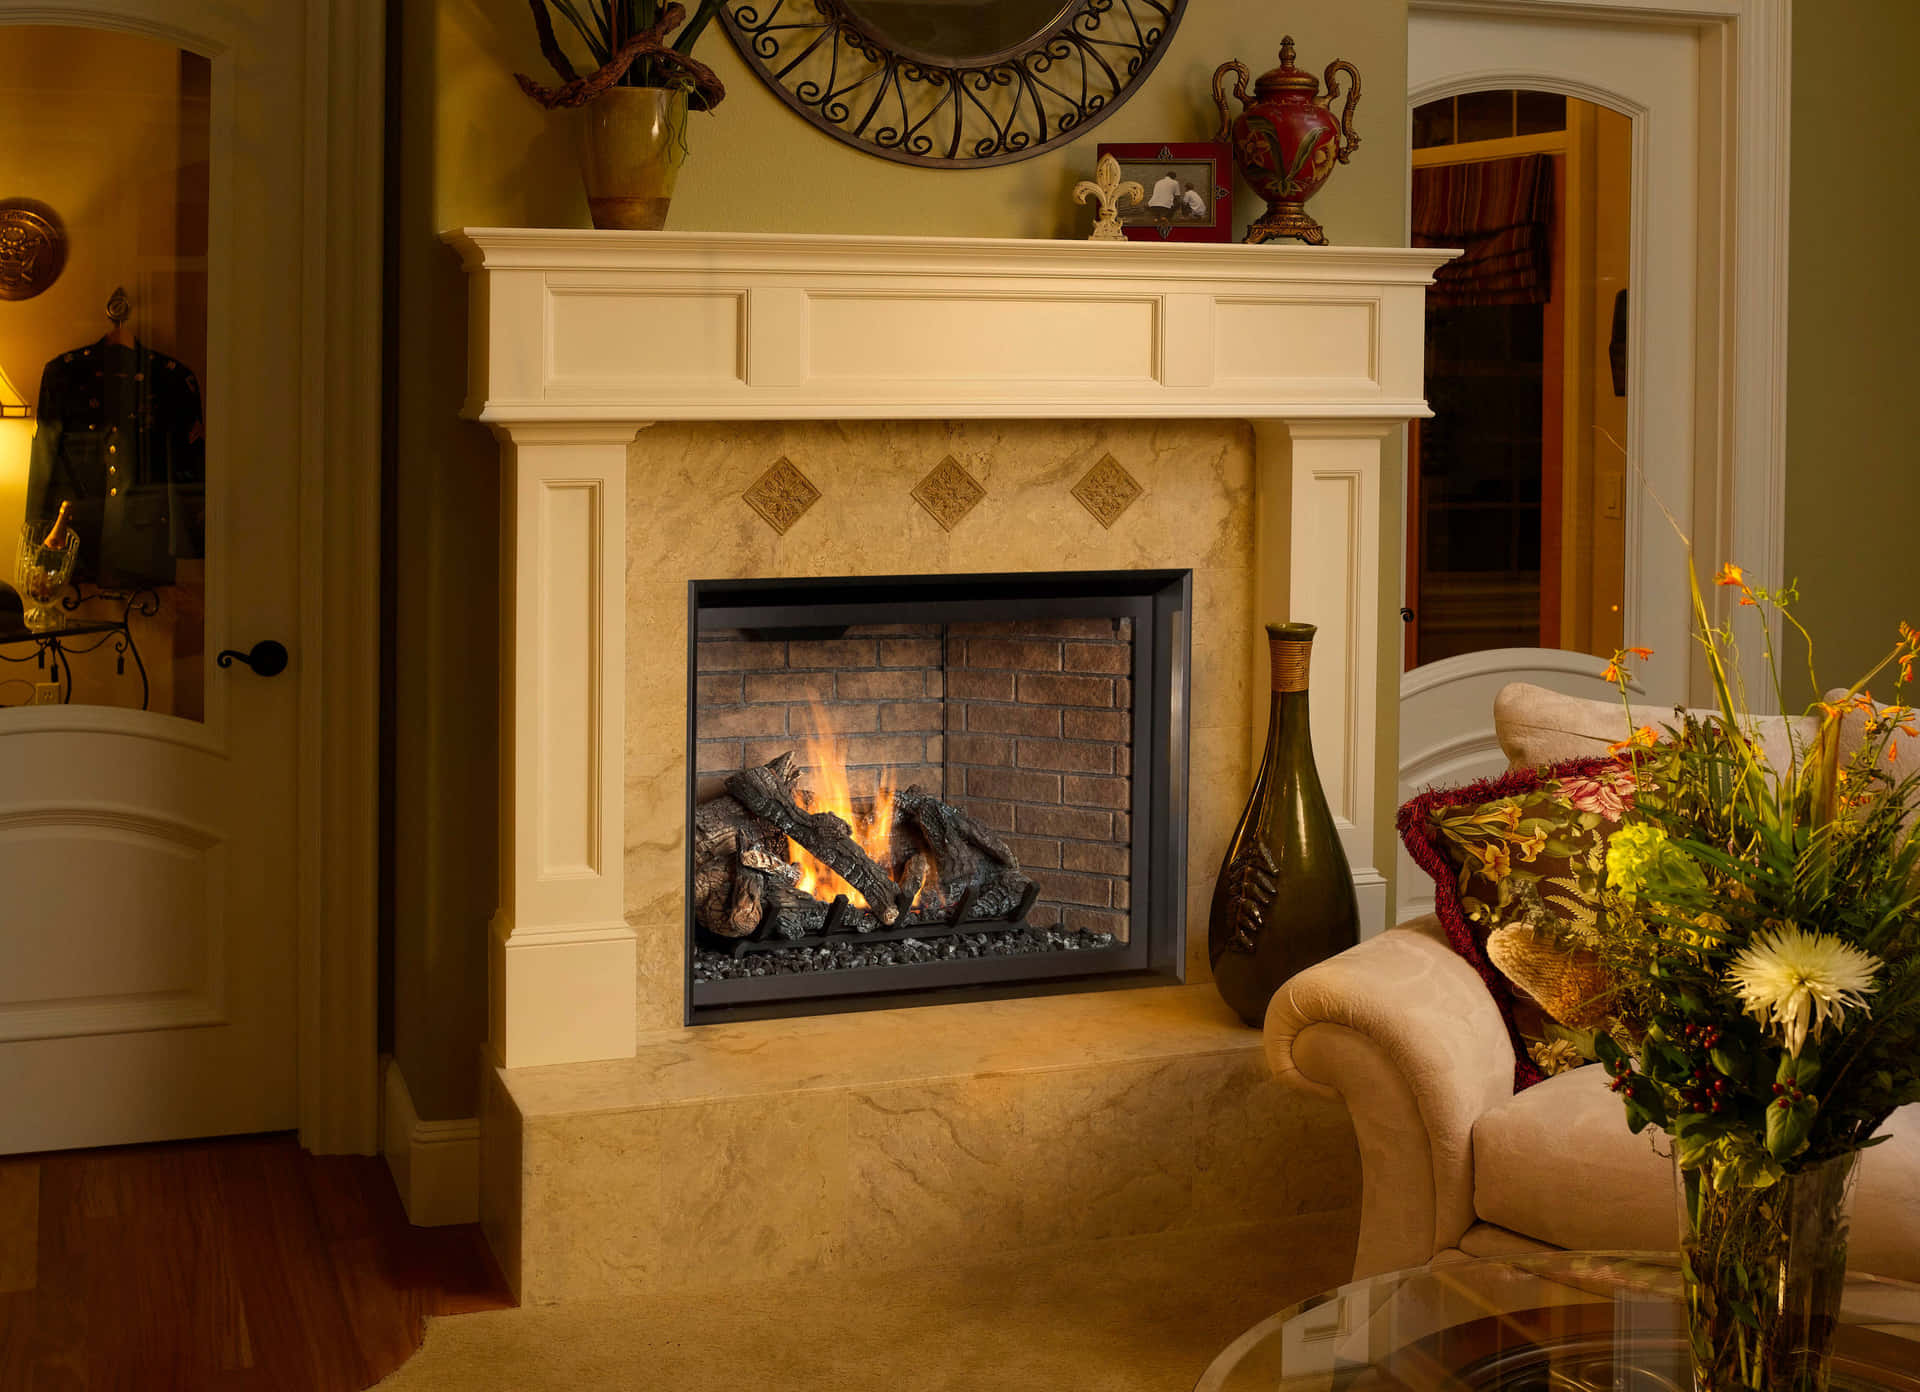 Enjoy a Cozy Night by the Fireplace